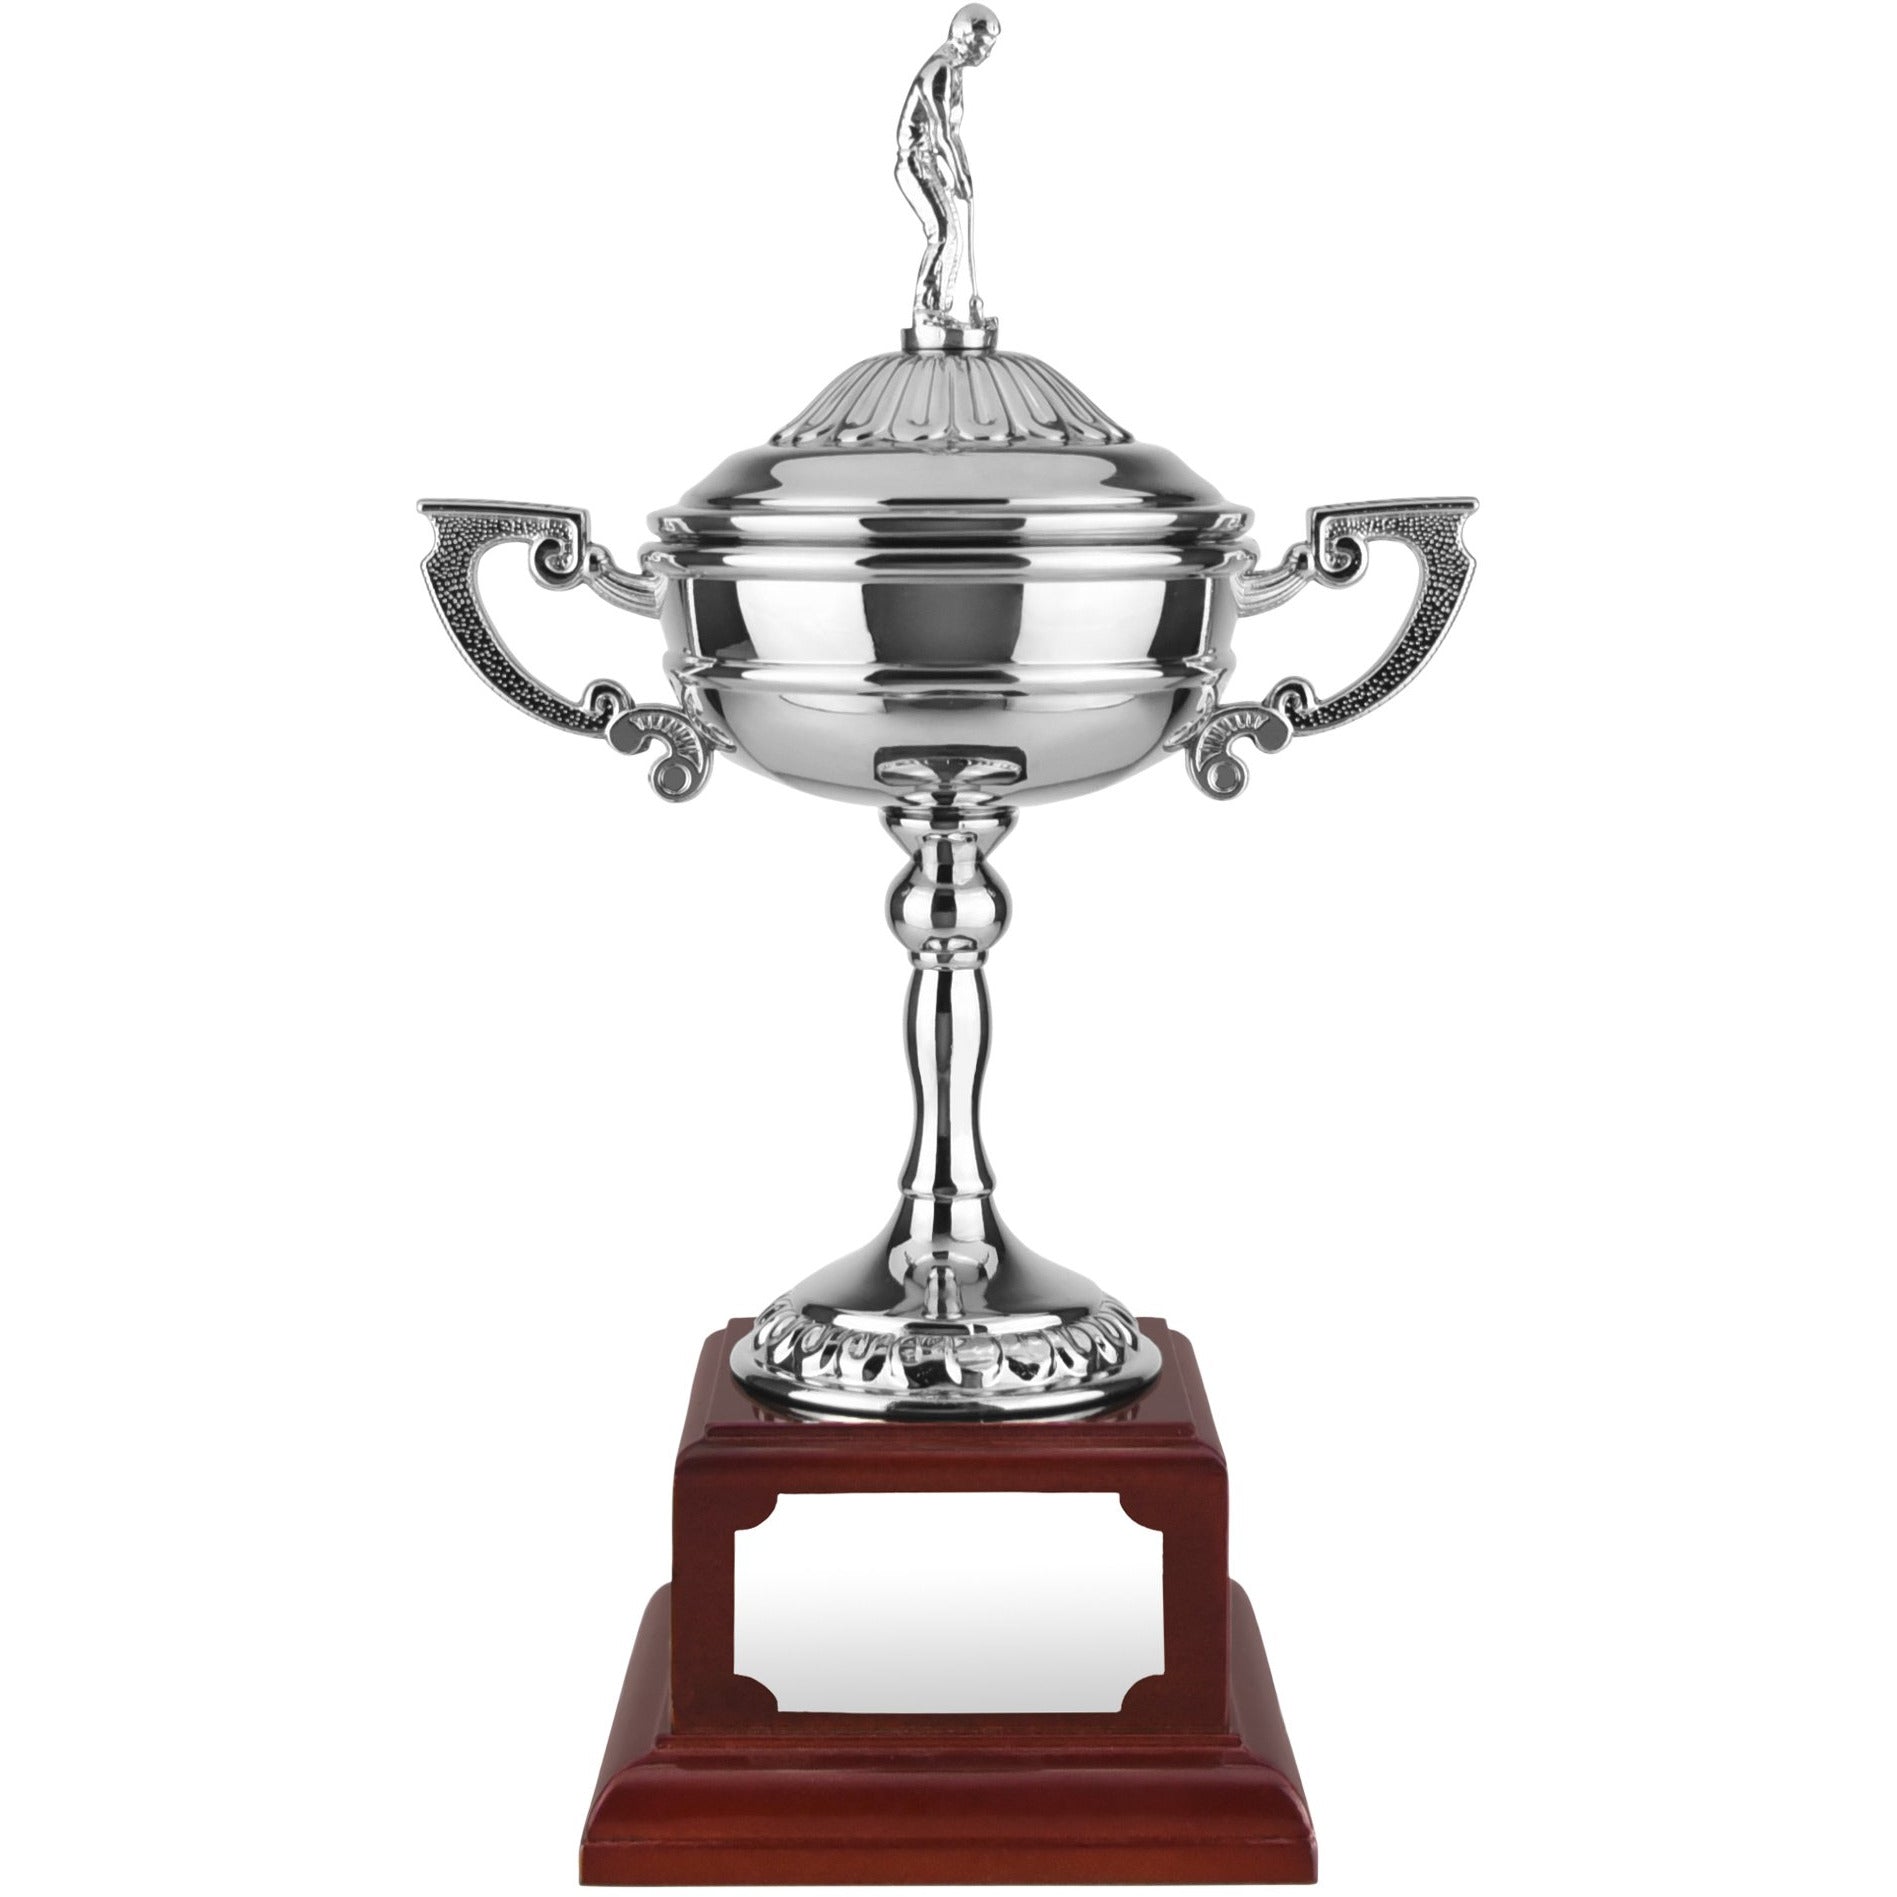 Nickel Plated Endurance Golf Ryder Cup